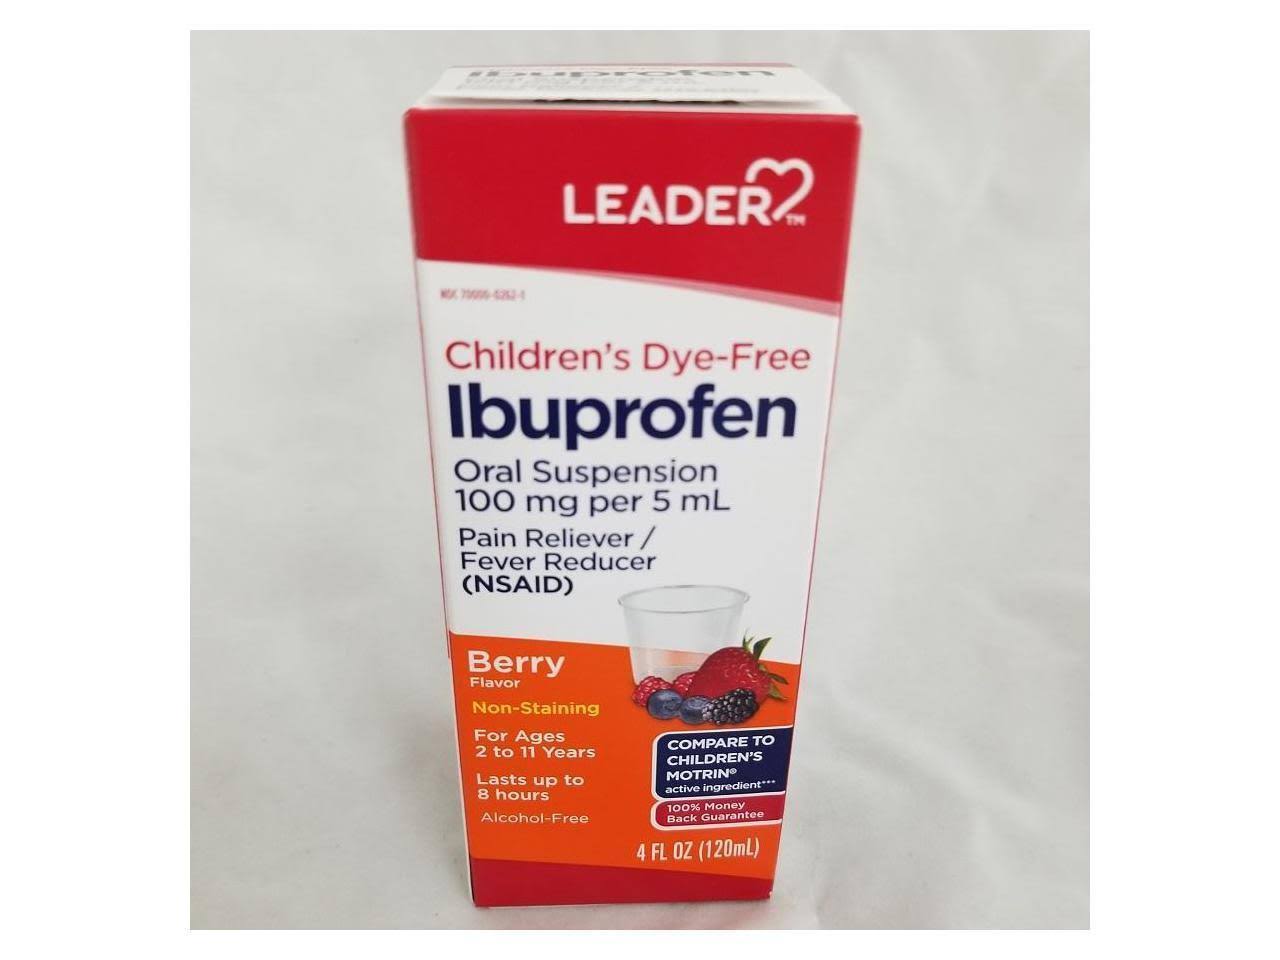 Leader Children's Dye-Free Ibuprofen, 100mg/5mL, 4oz 096295131642f339, Size: 4 fl oz